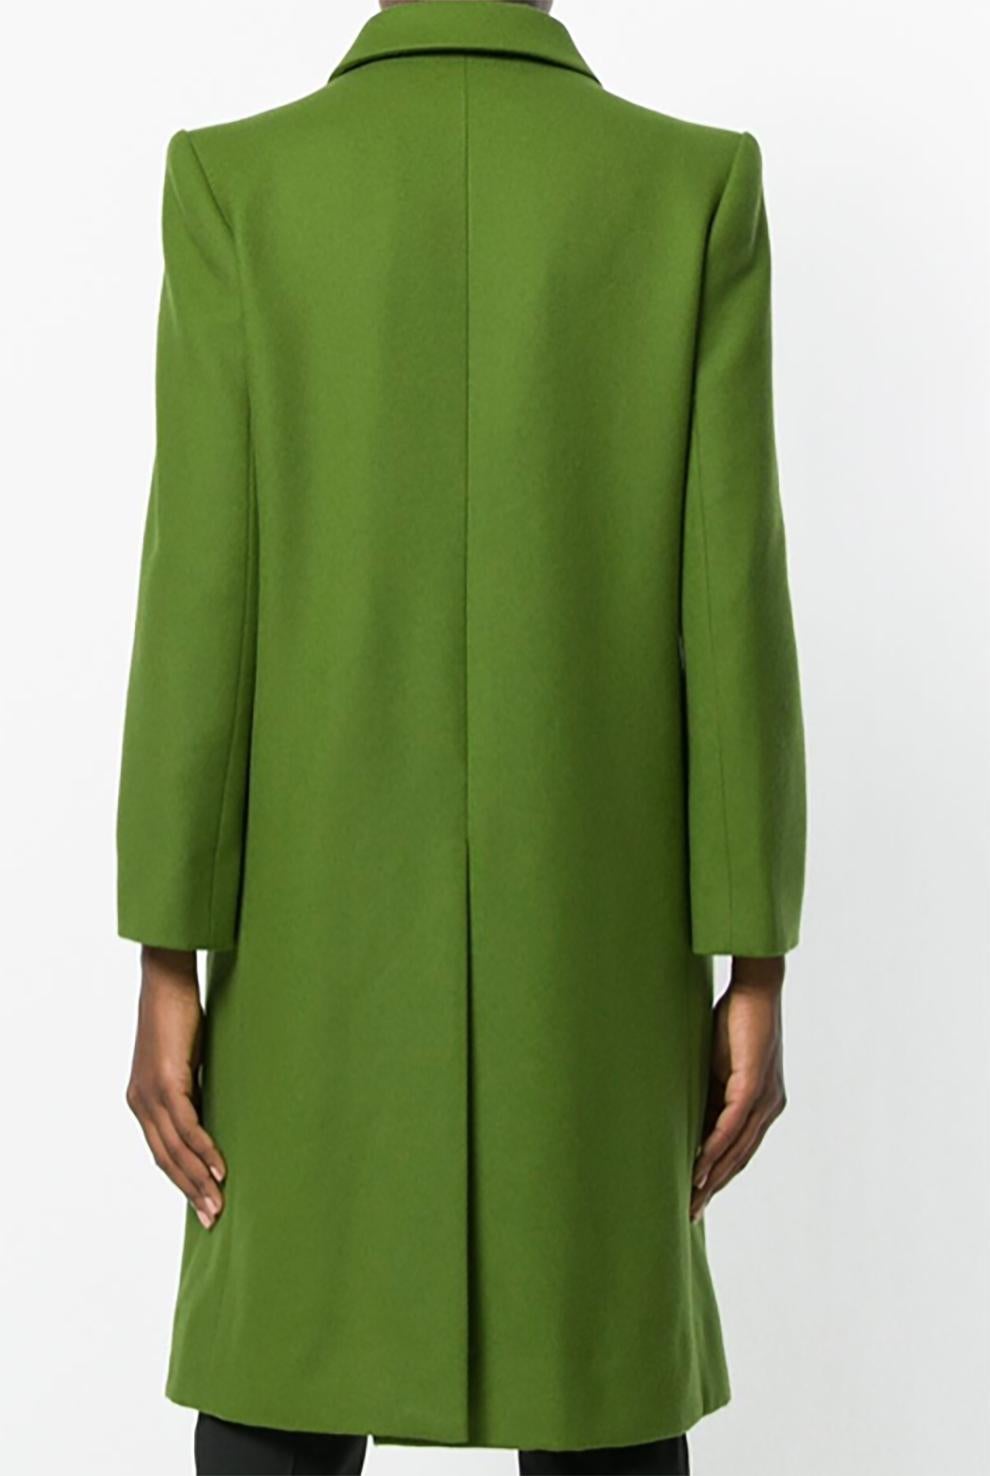 Women's Yves Saint Laurent Green Wool Coat